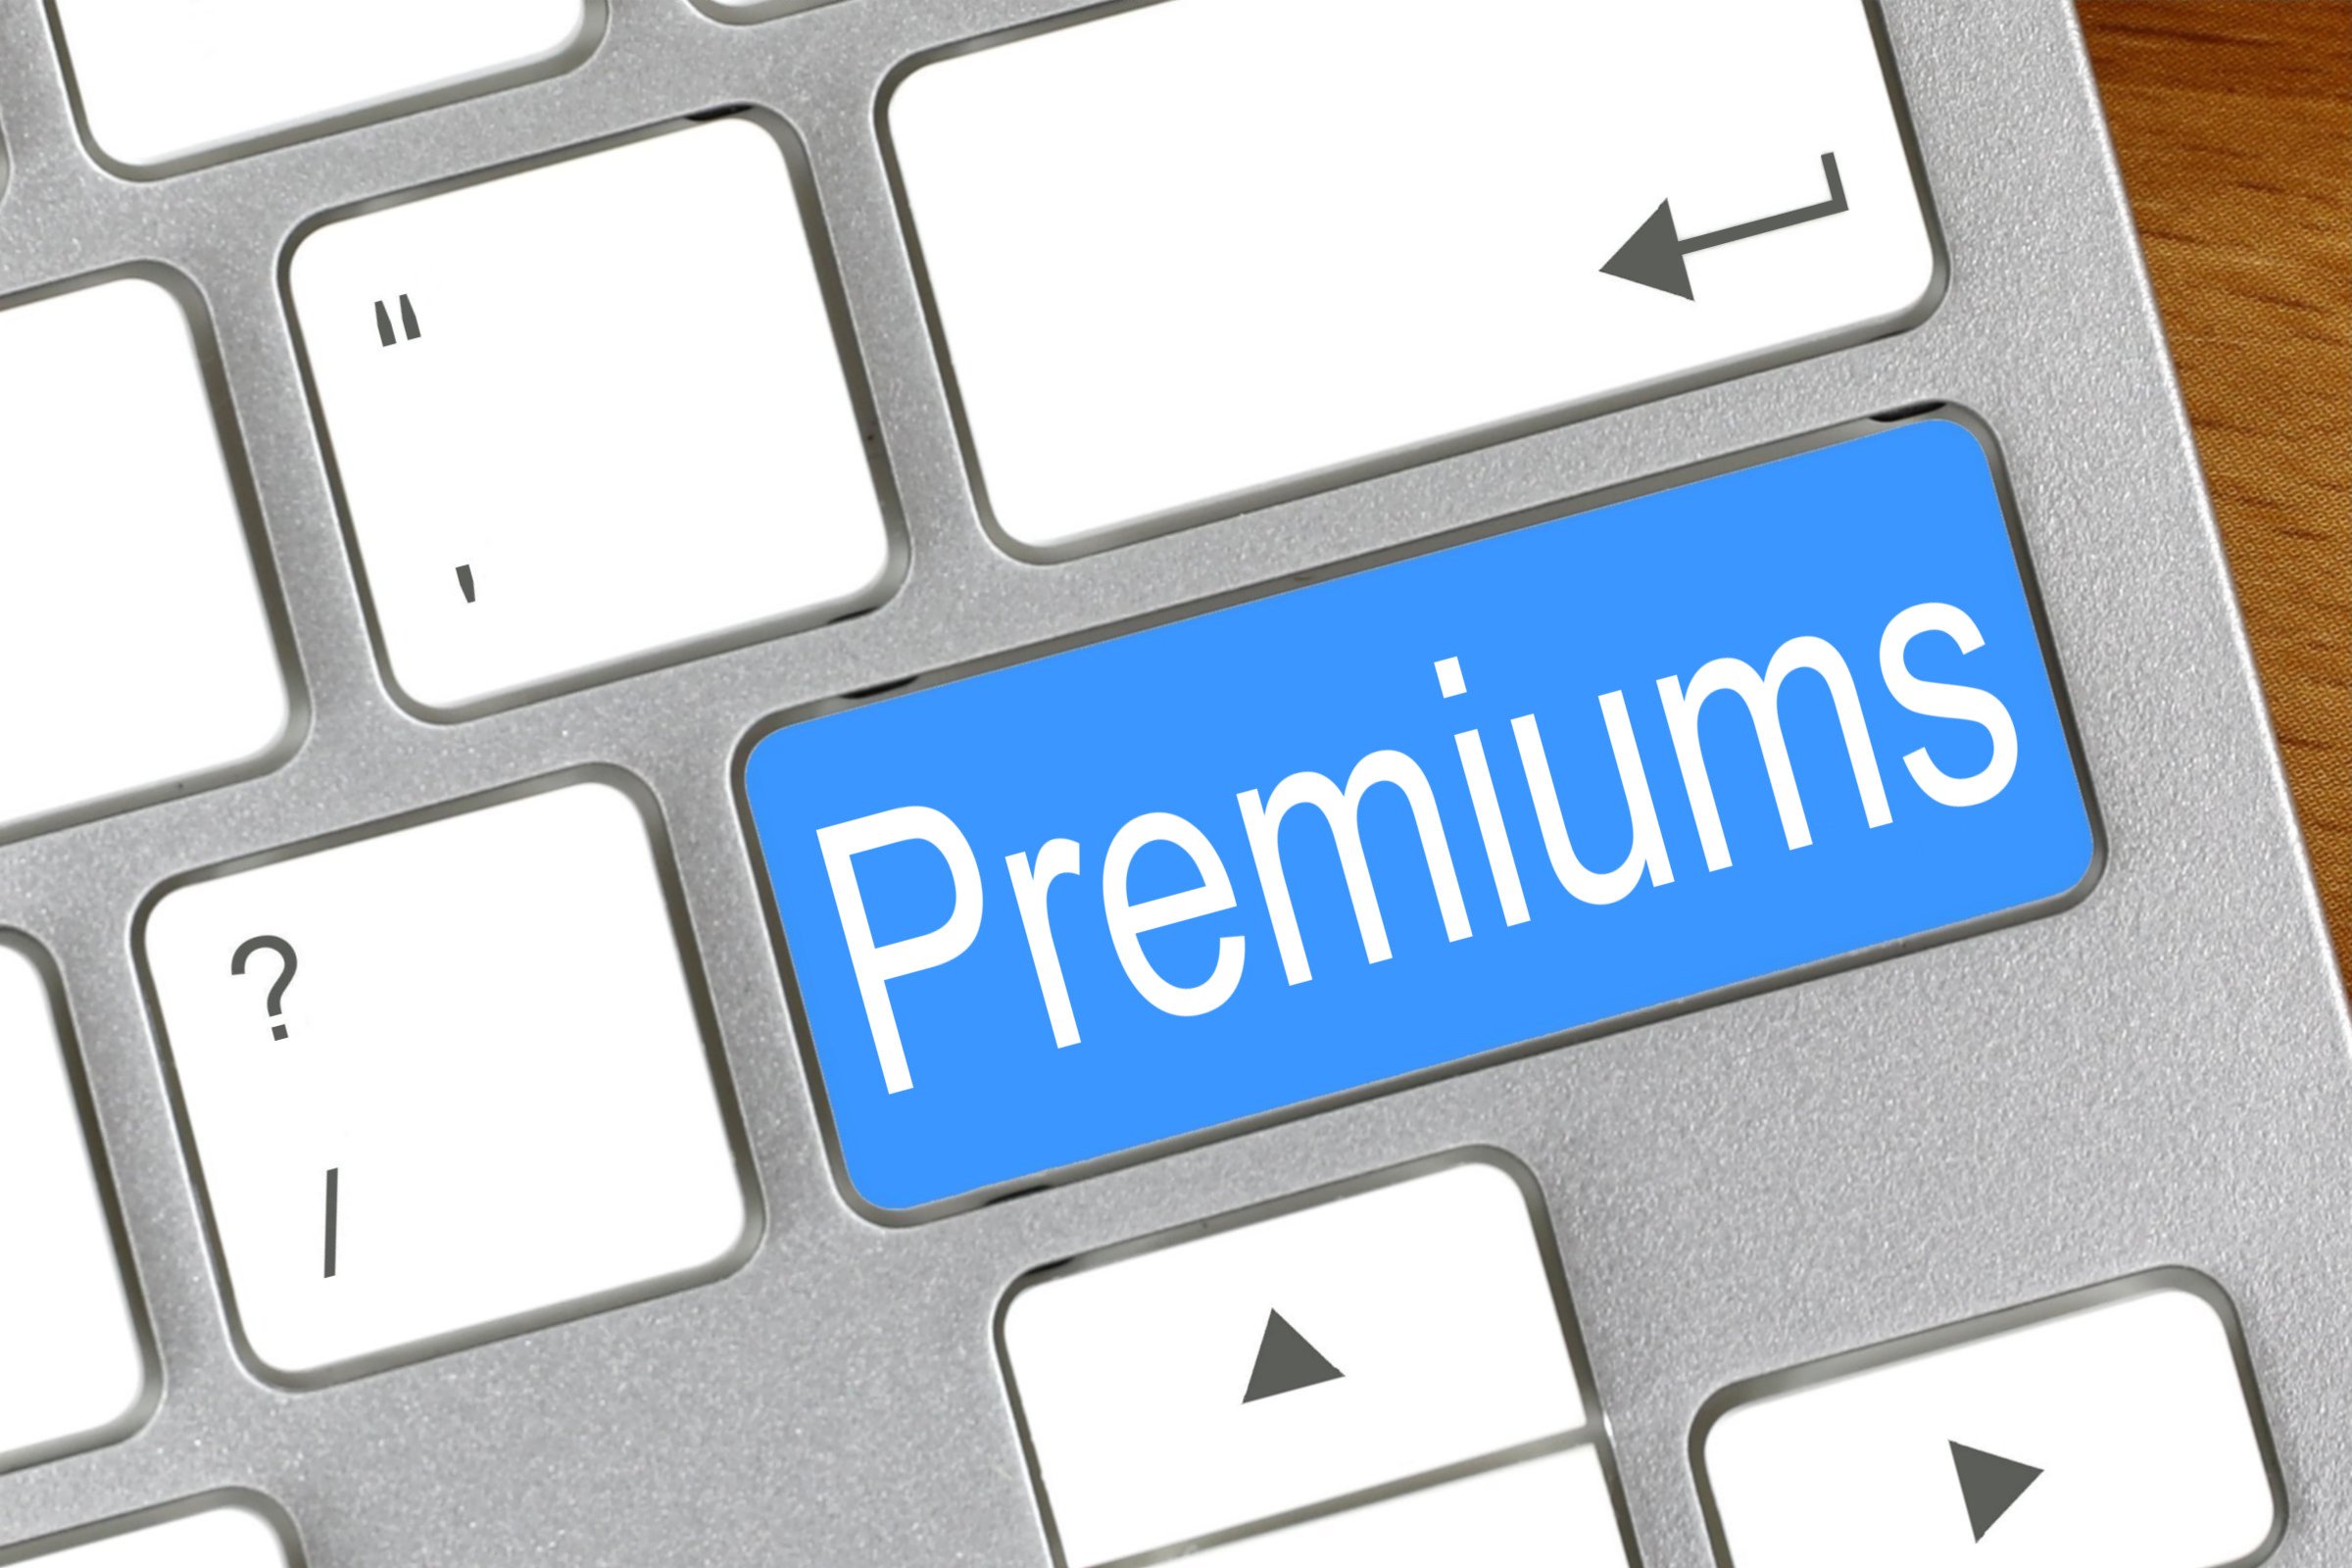 premiums